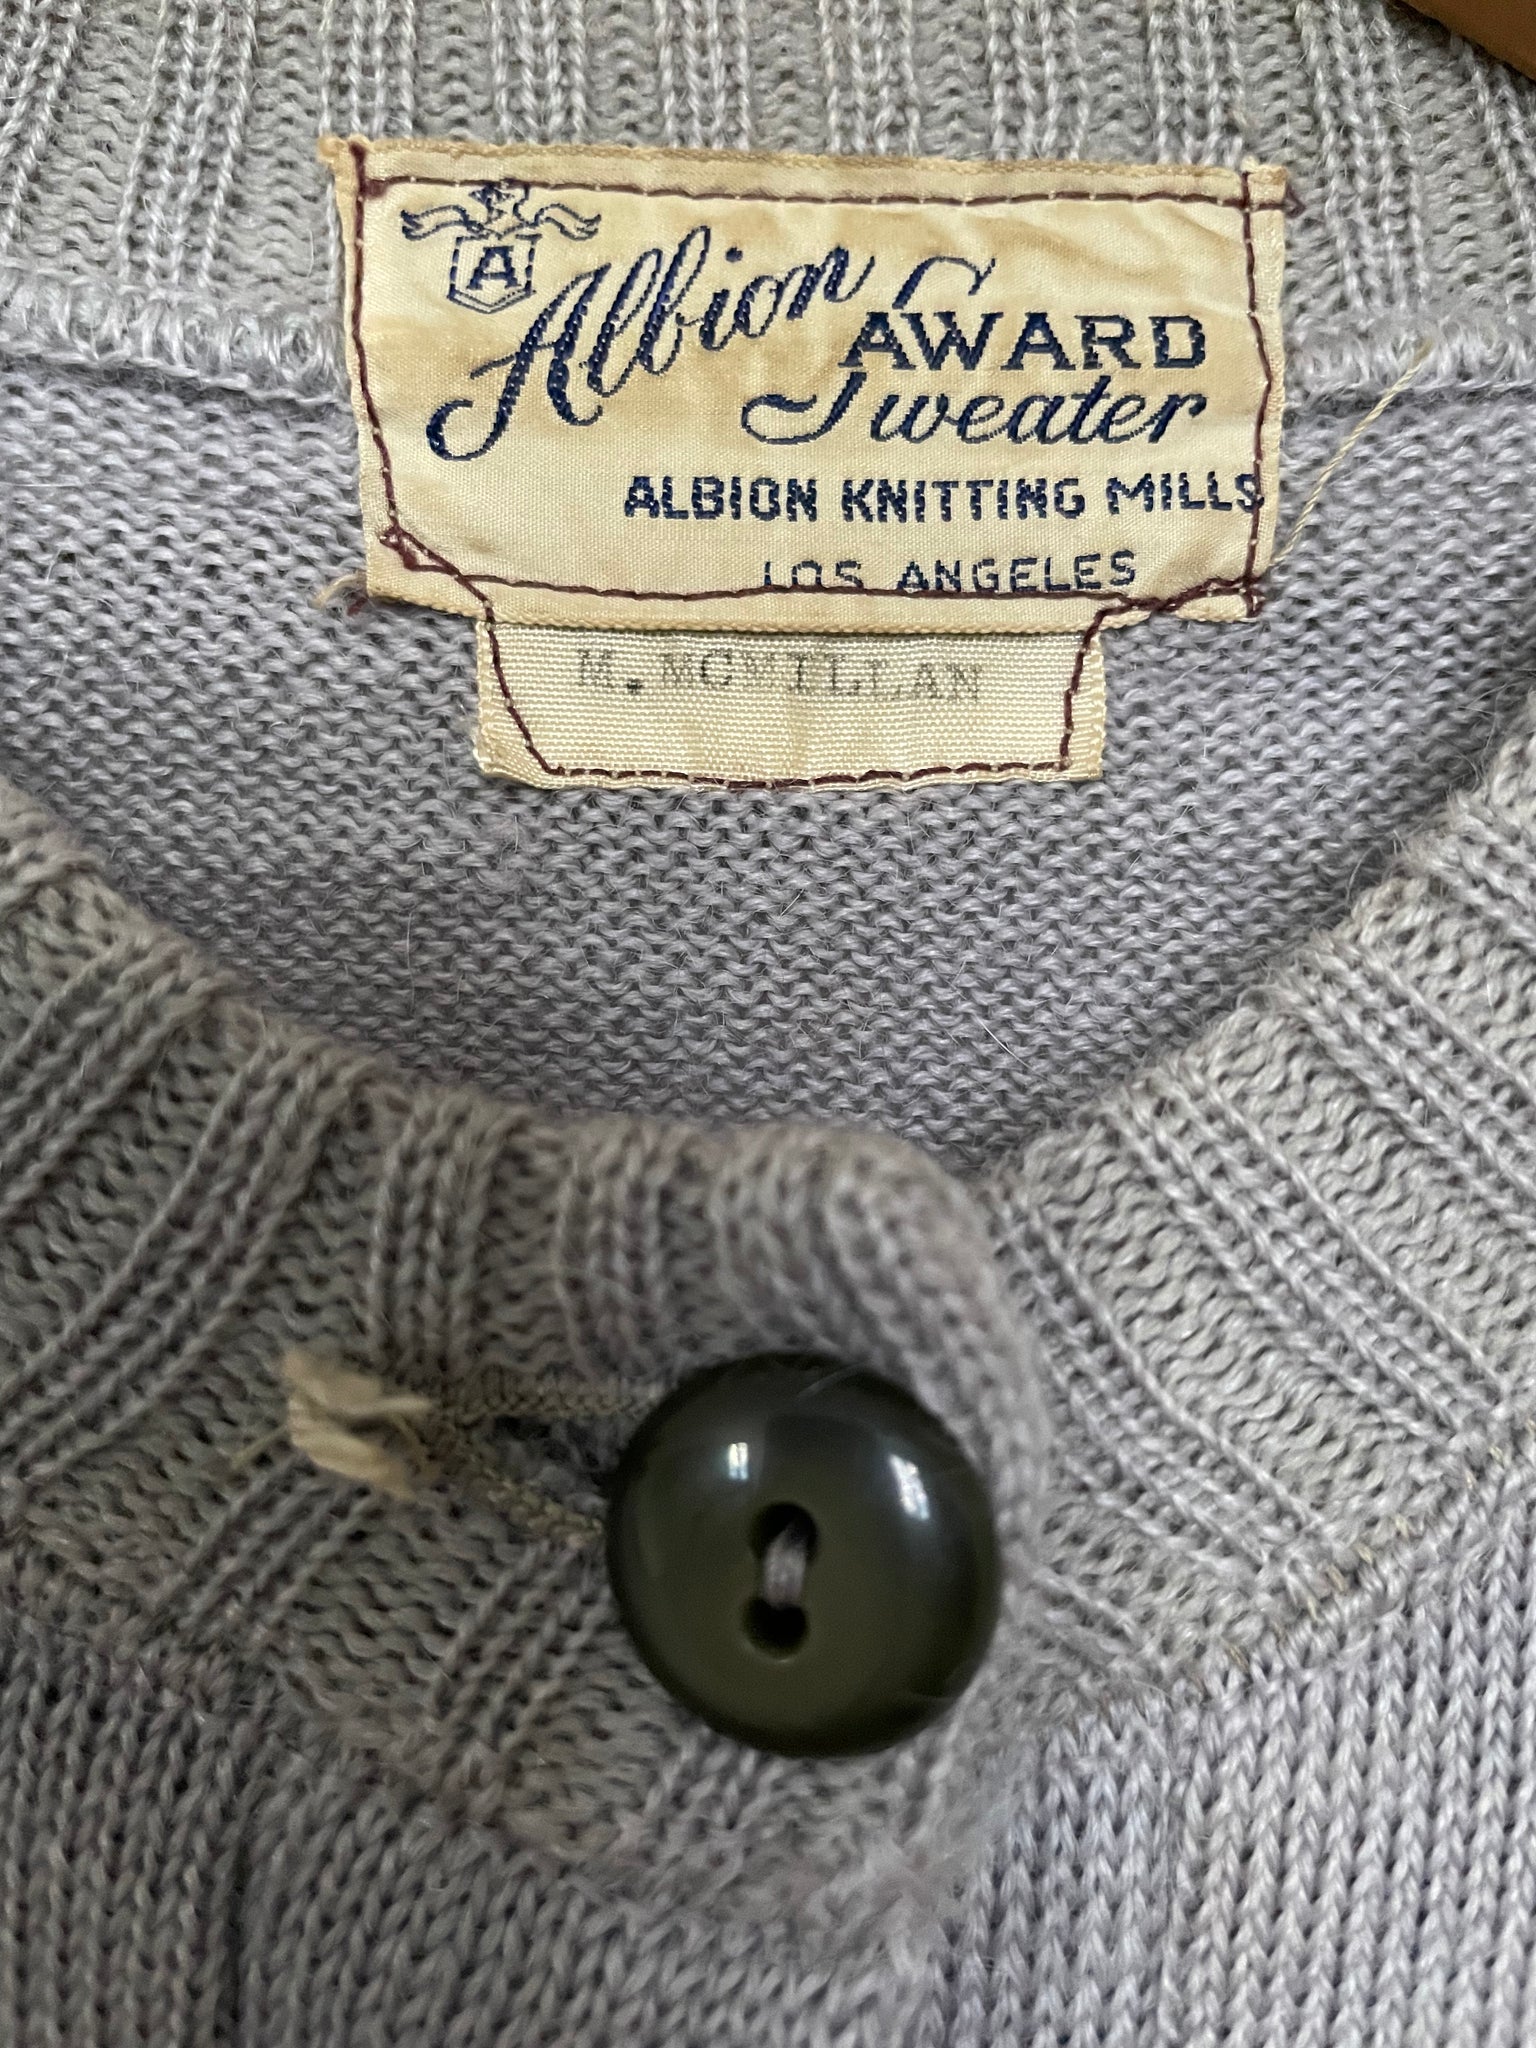 Rare 1930s Womens Periwinkle Wool Knit Collegiate Cardigan